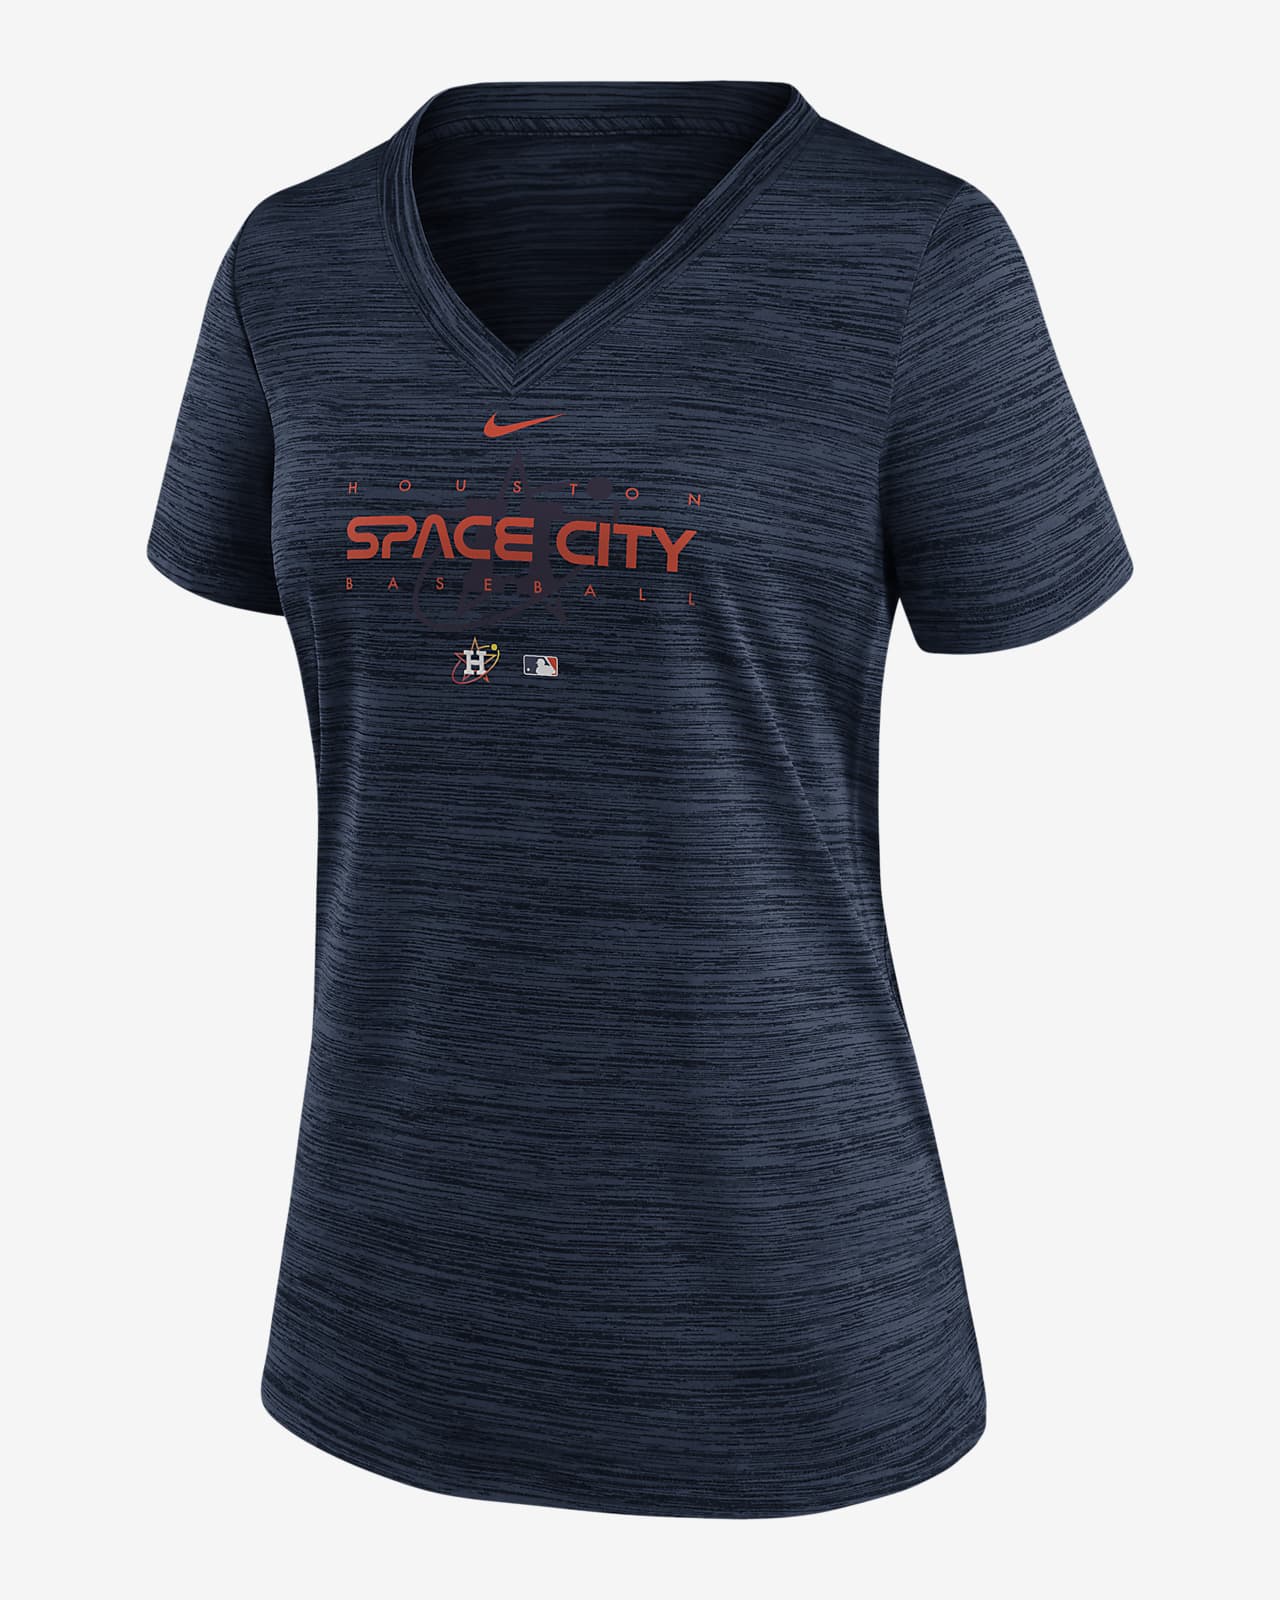 women houston astros space city jersey